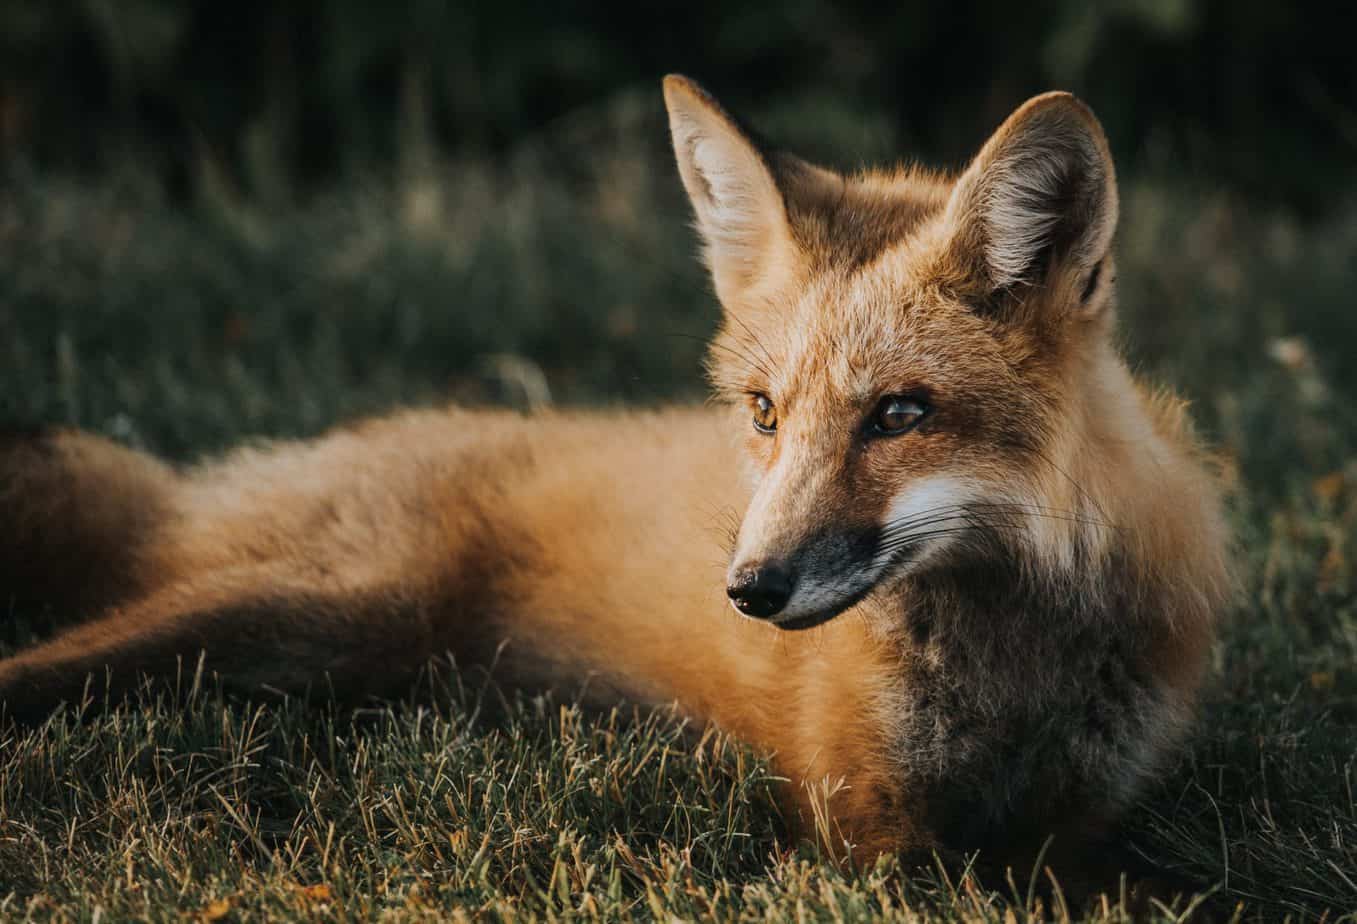 A beautiful photo of a fox